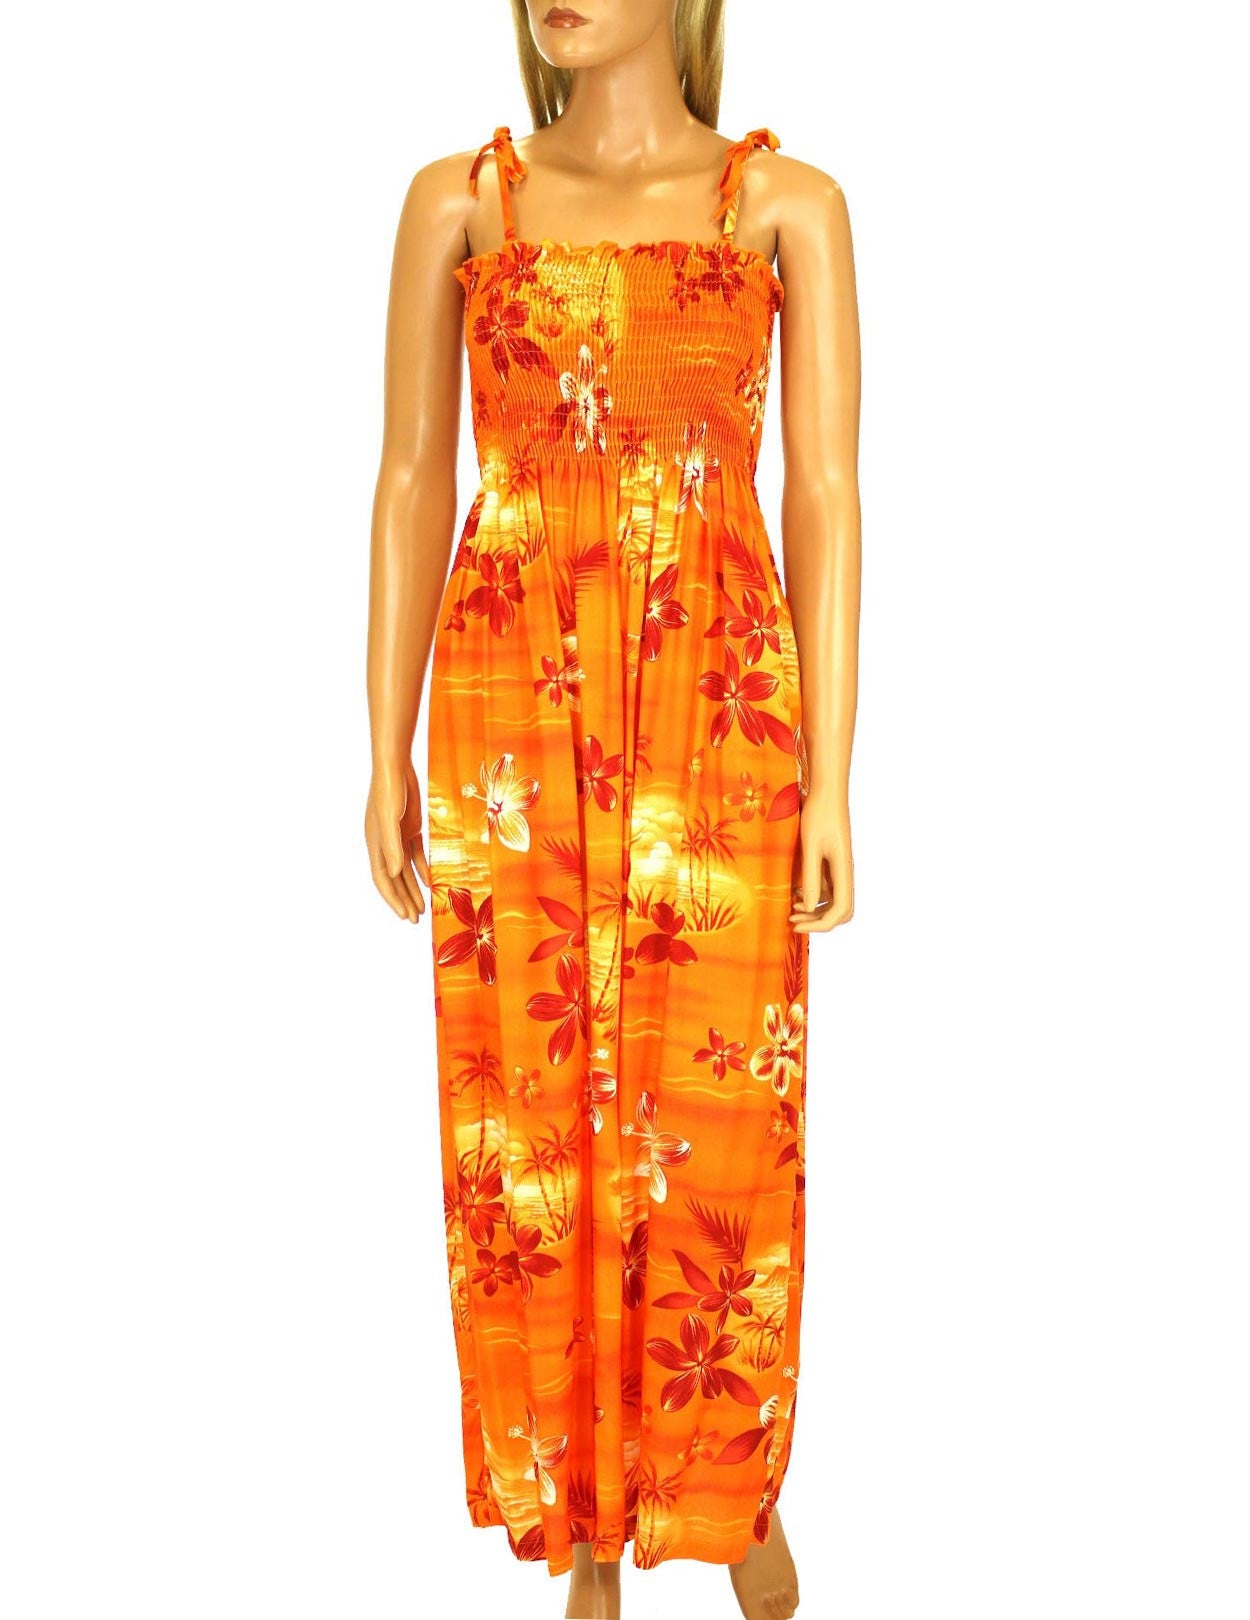 Tube Top Dress Moonlight Scenic Orange – Two Palms Aloha Wear Manufacturer